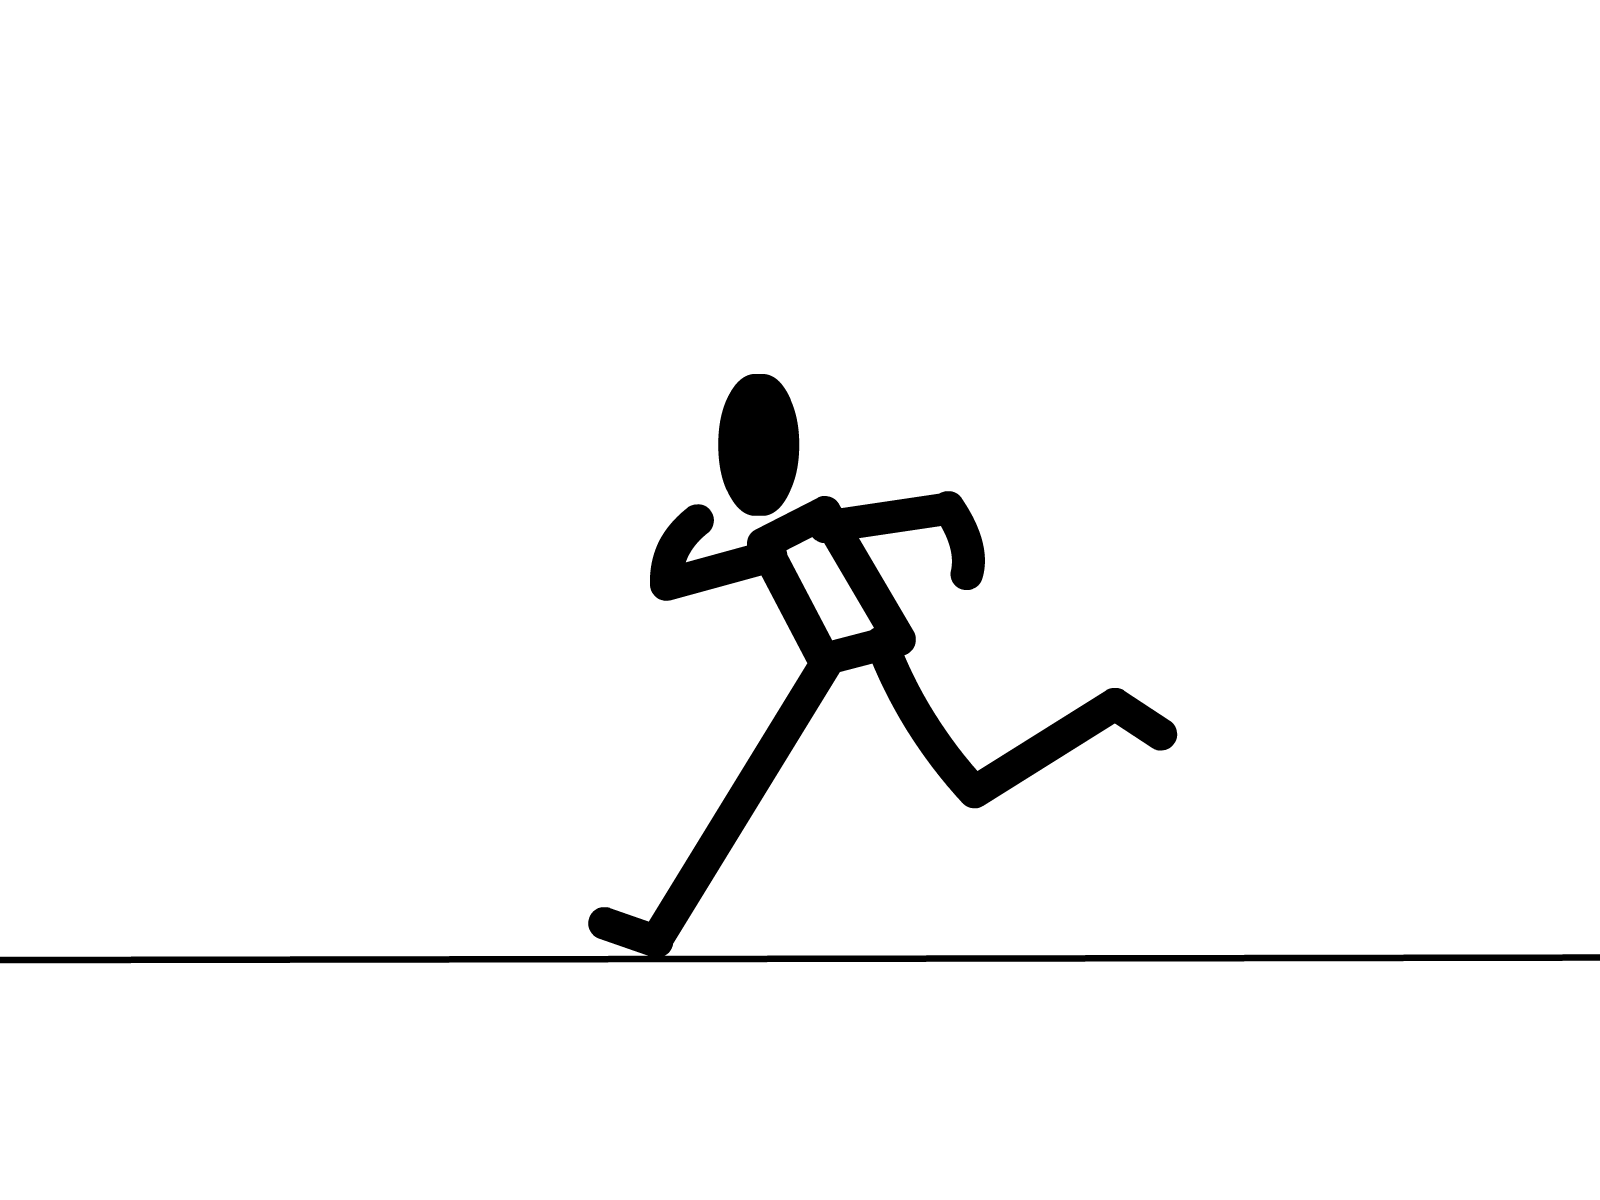 Run design illustration vector